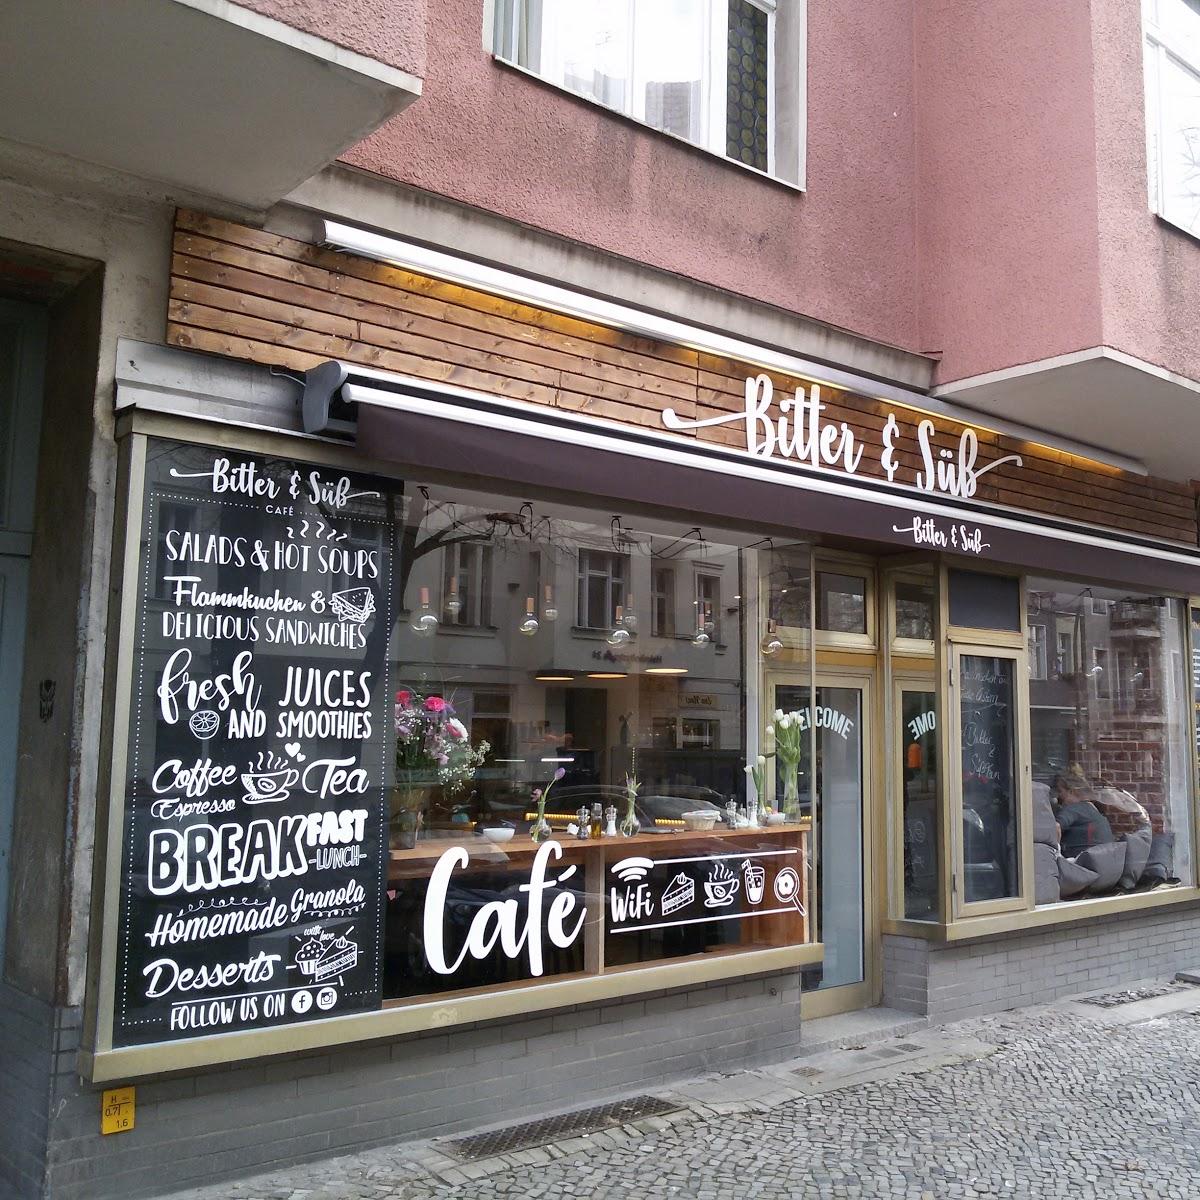 Restaurant "Bitter & Süß" in Berlin